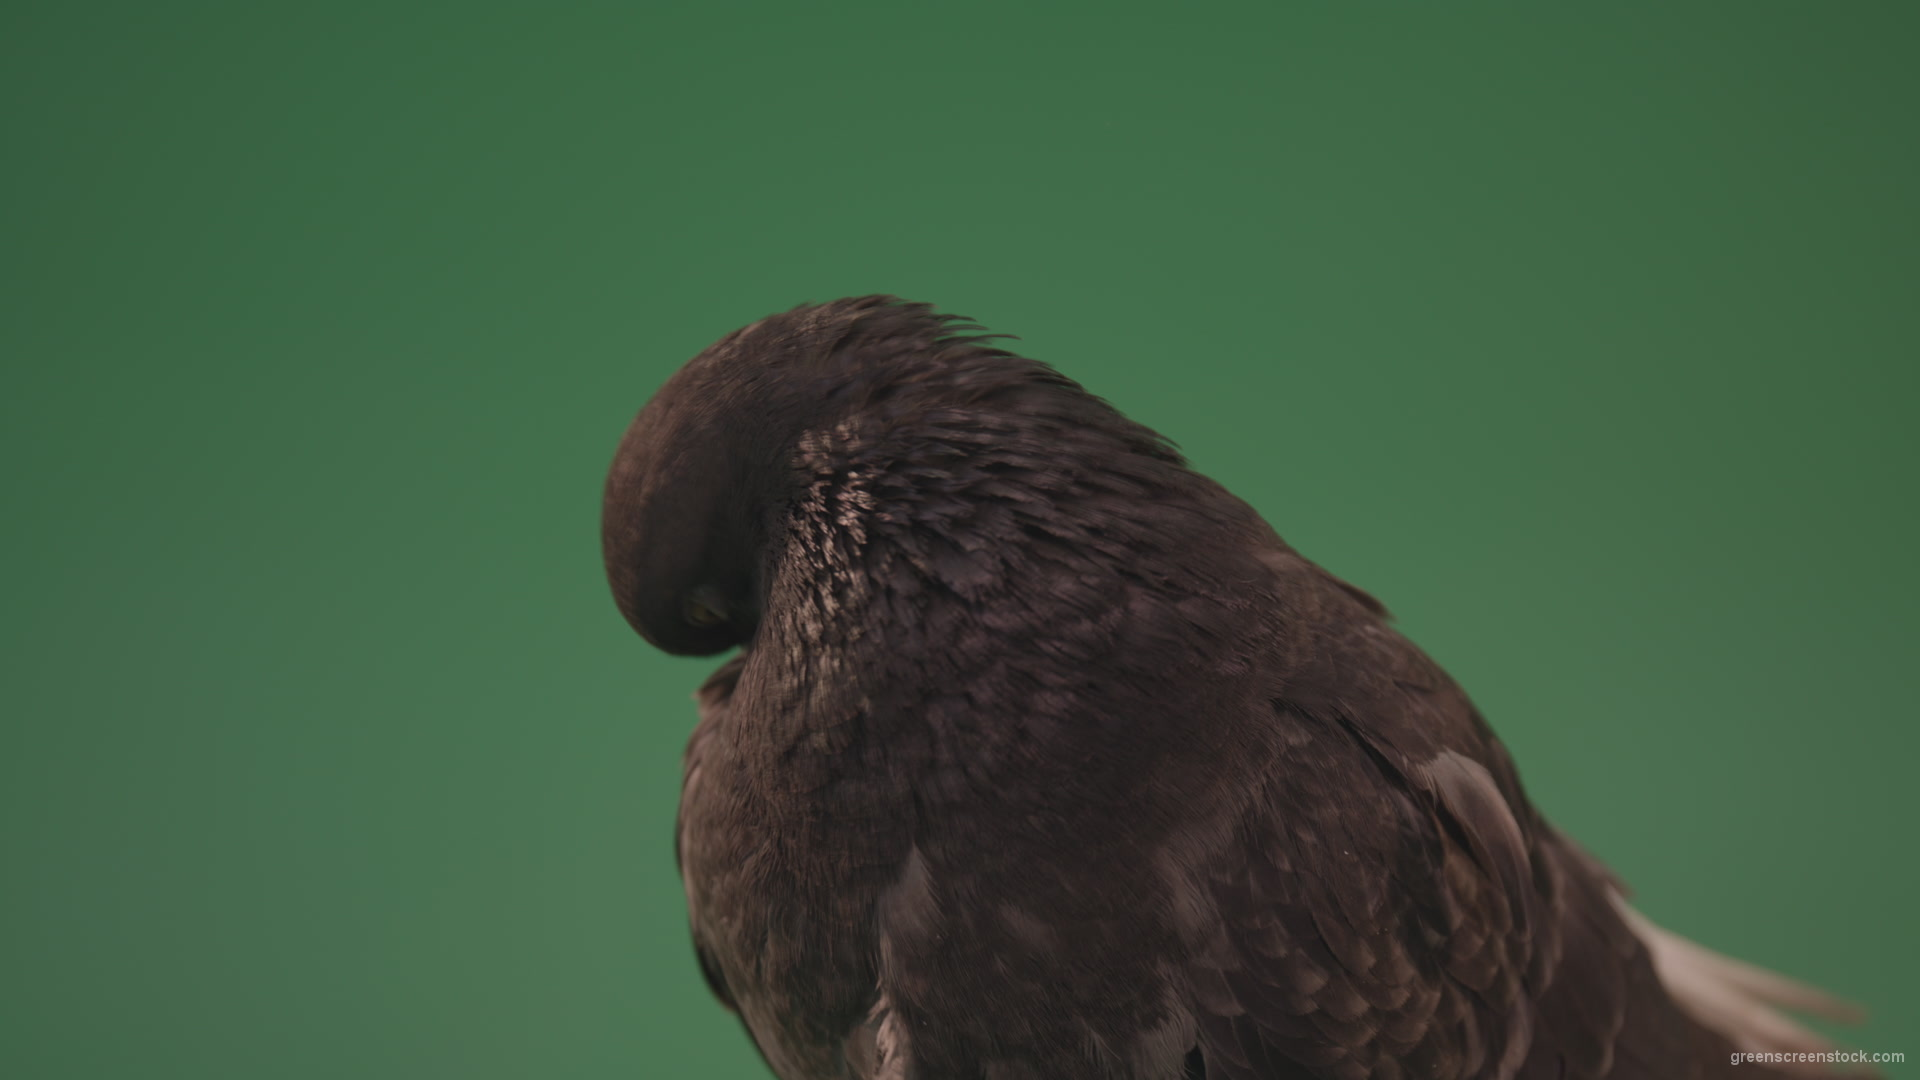 Gray-bird-of-mountain-origin-pigeon-strokes-its-lush-feathers-isolated-in-green-screen-studio_002 Green Screen Stock